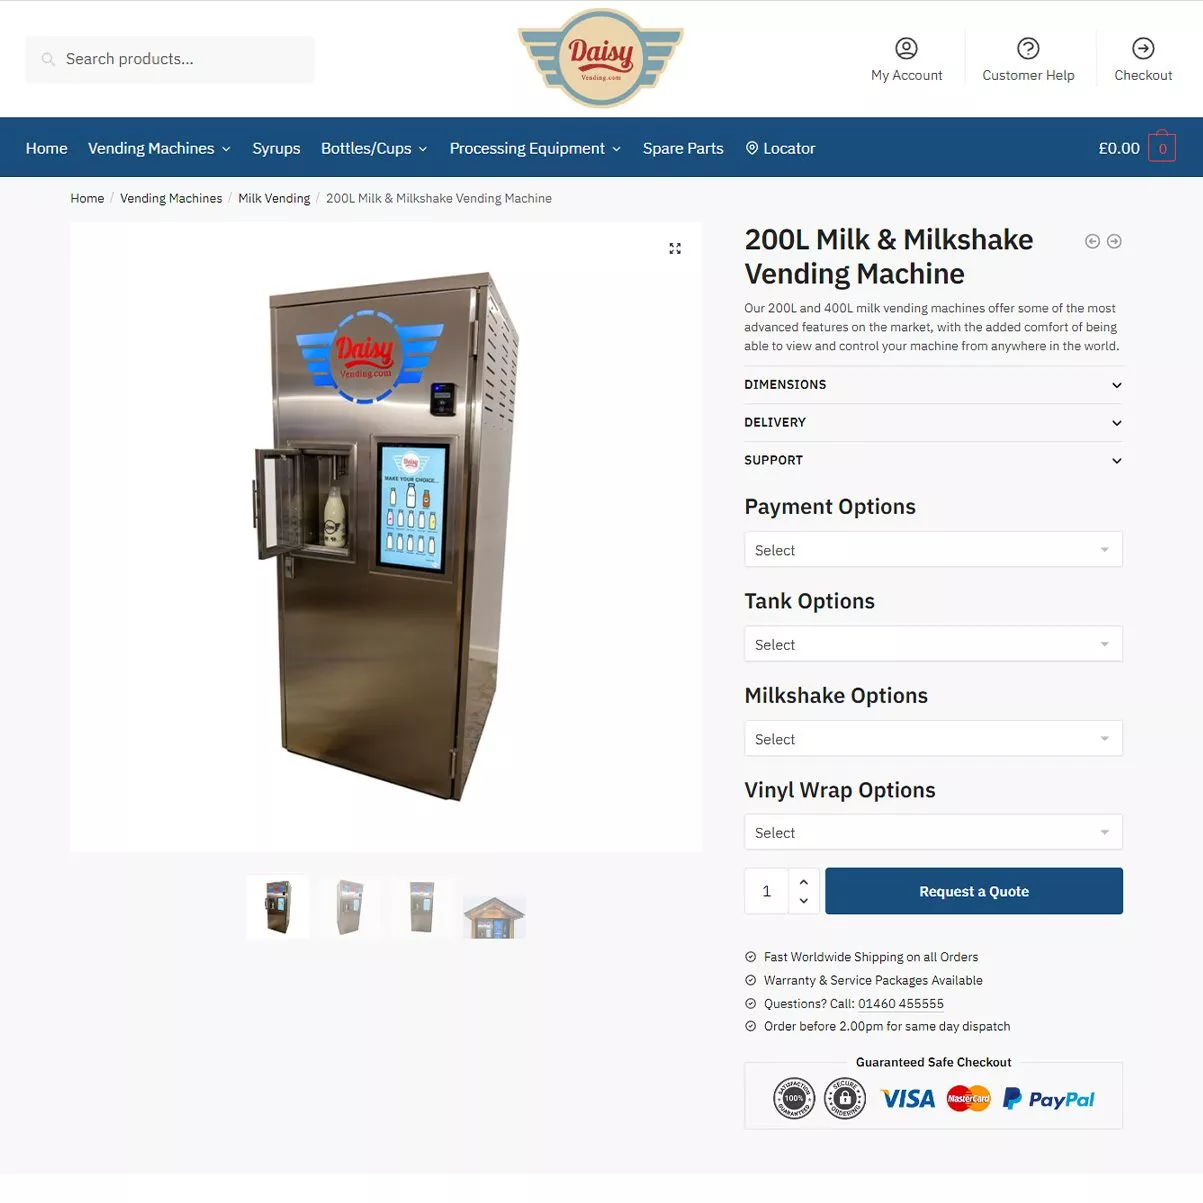 Daisy Vending Product Page Screenshot showing 200L Milkshake Vending Machine